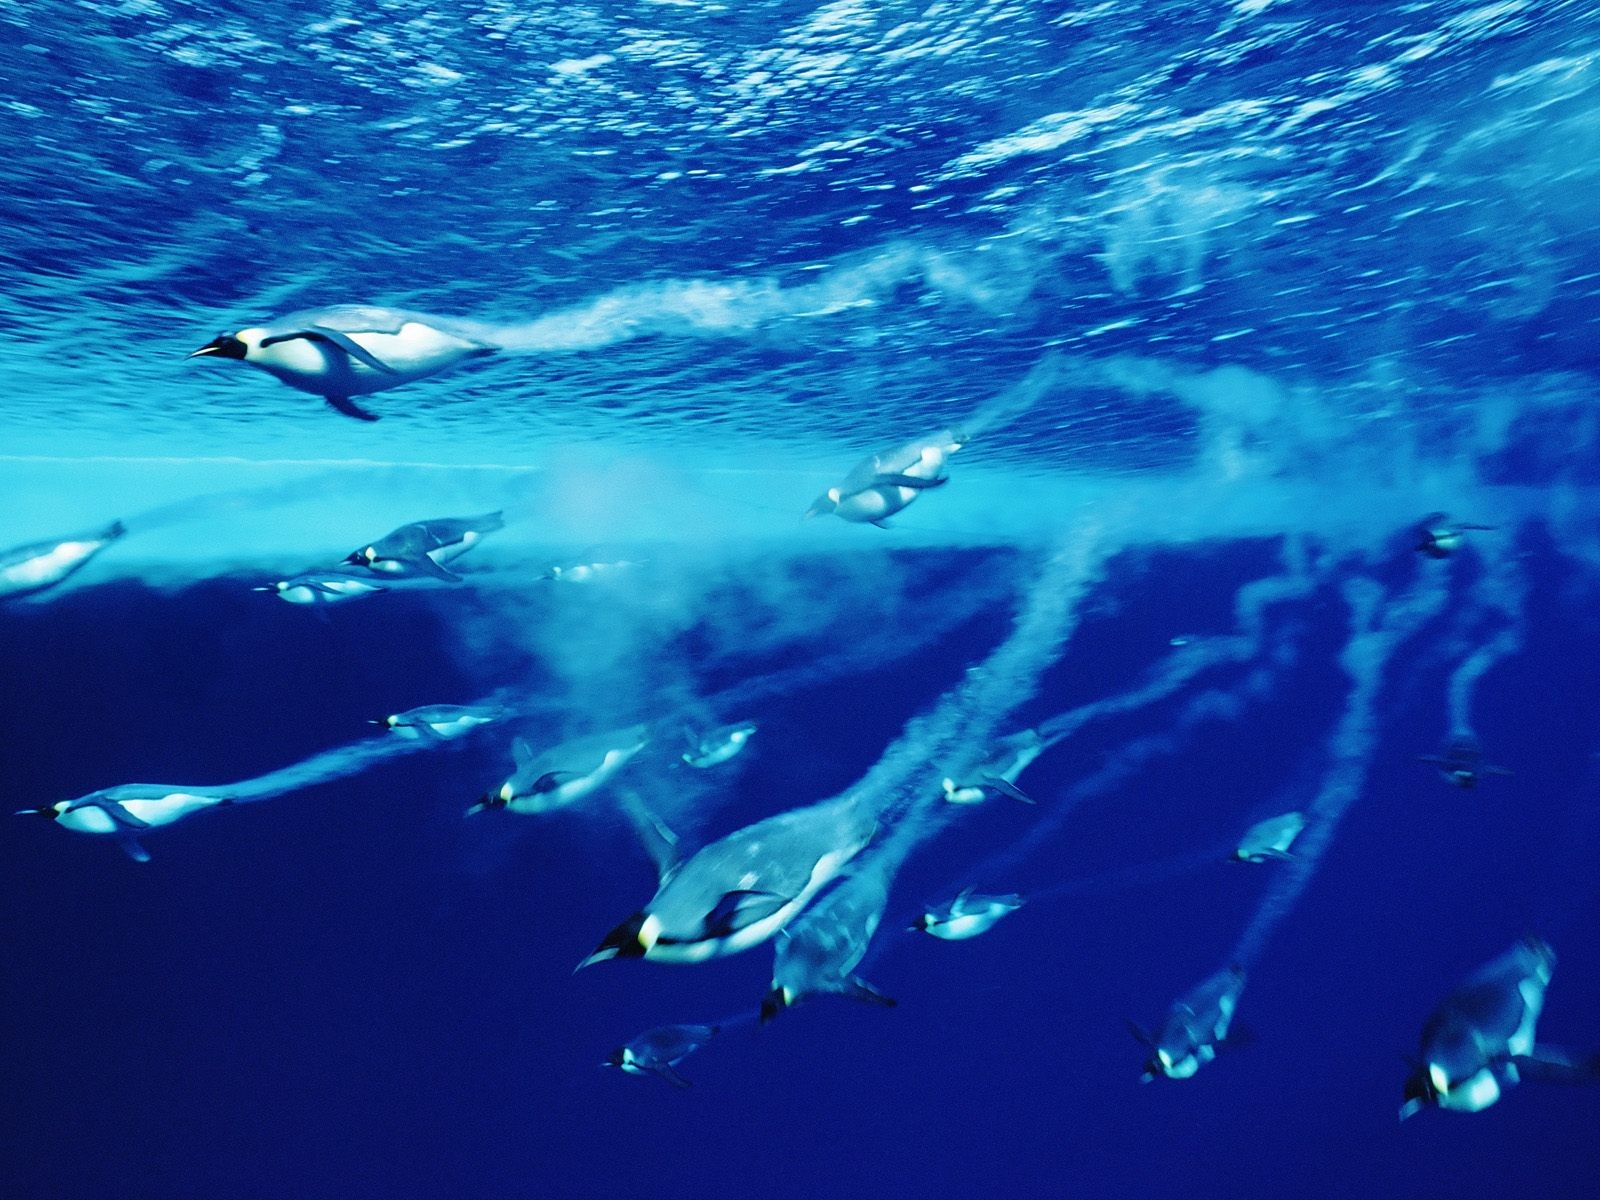 https://blogger.googleusercontent.com/img/b/R29vZ2xl/AVvXsEiRYXf3X0aNrXzdWycBa_3S2bV1hPZeLyV3Lkv6zUNyxPhHGT3zifwtysumuh7KTYJI3MPsvEXCUhSahJT4uRwnUJ7iyoChaEOhRREdwUsBPGRP0Vm8ctCOaKgYHSguOEUCMV5OGTi_1DQ/s1600/penguins-swimming-sea-full-hd-wallpaper.jpg